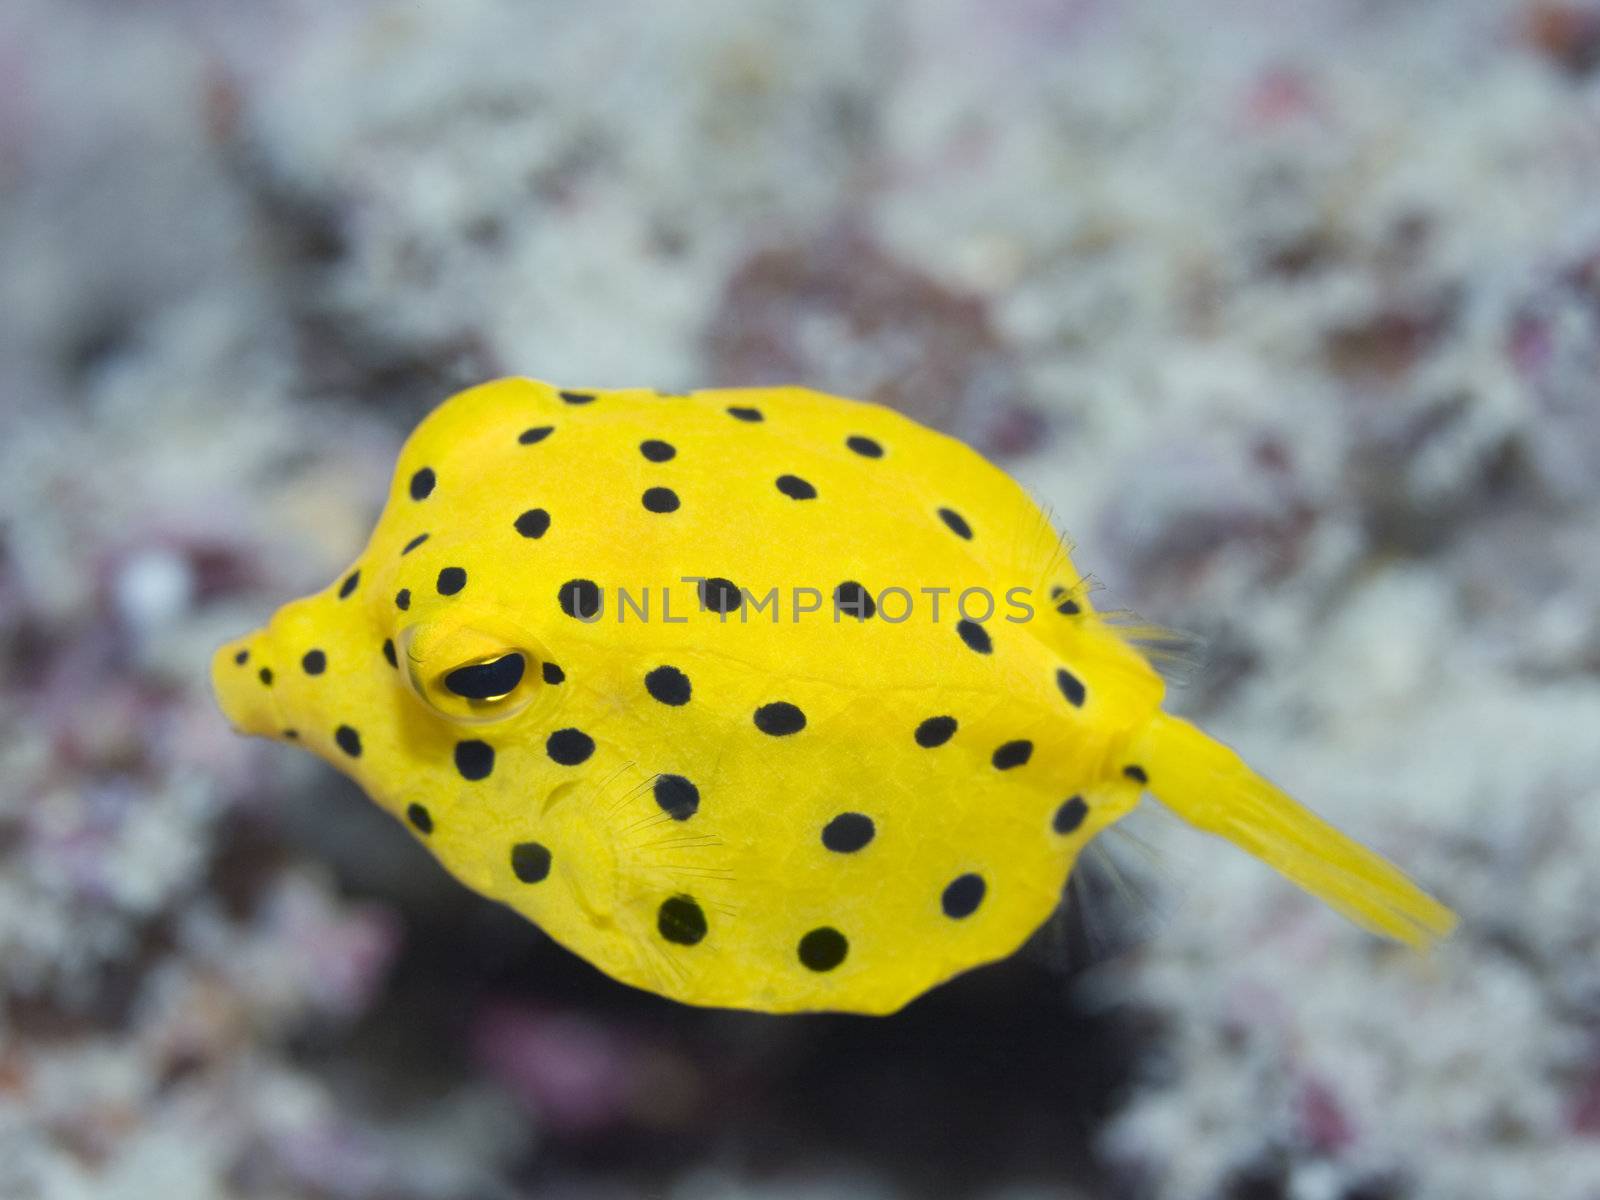 Black-spotted boxfish by GoodOlga